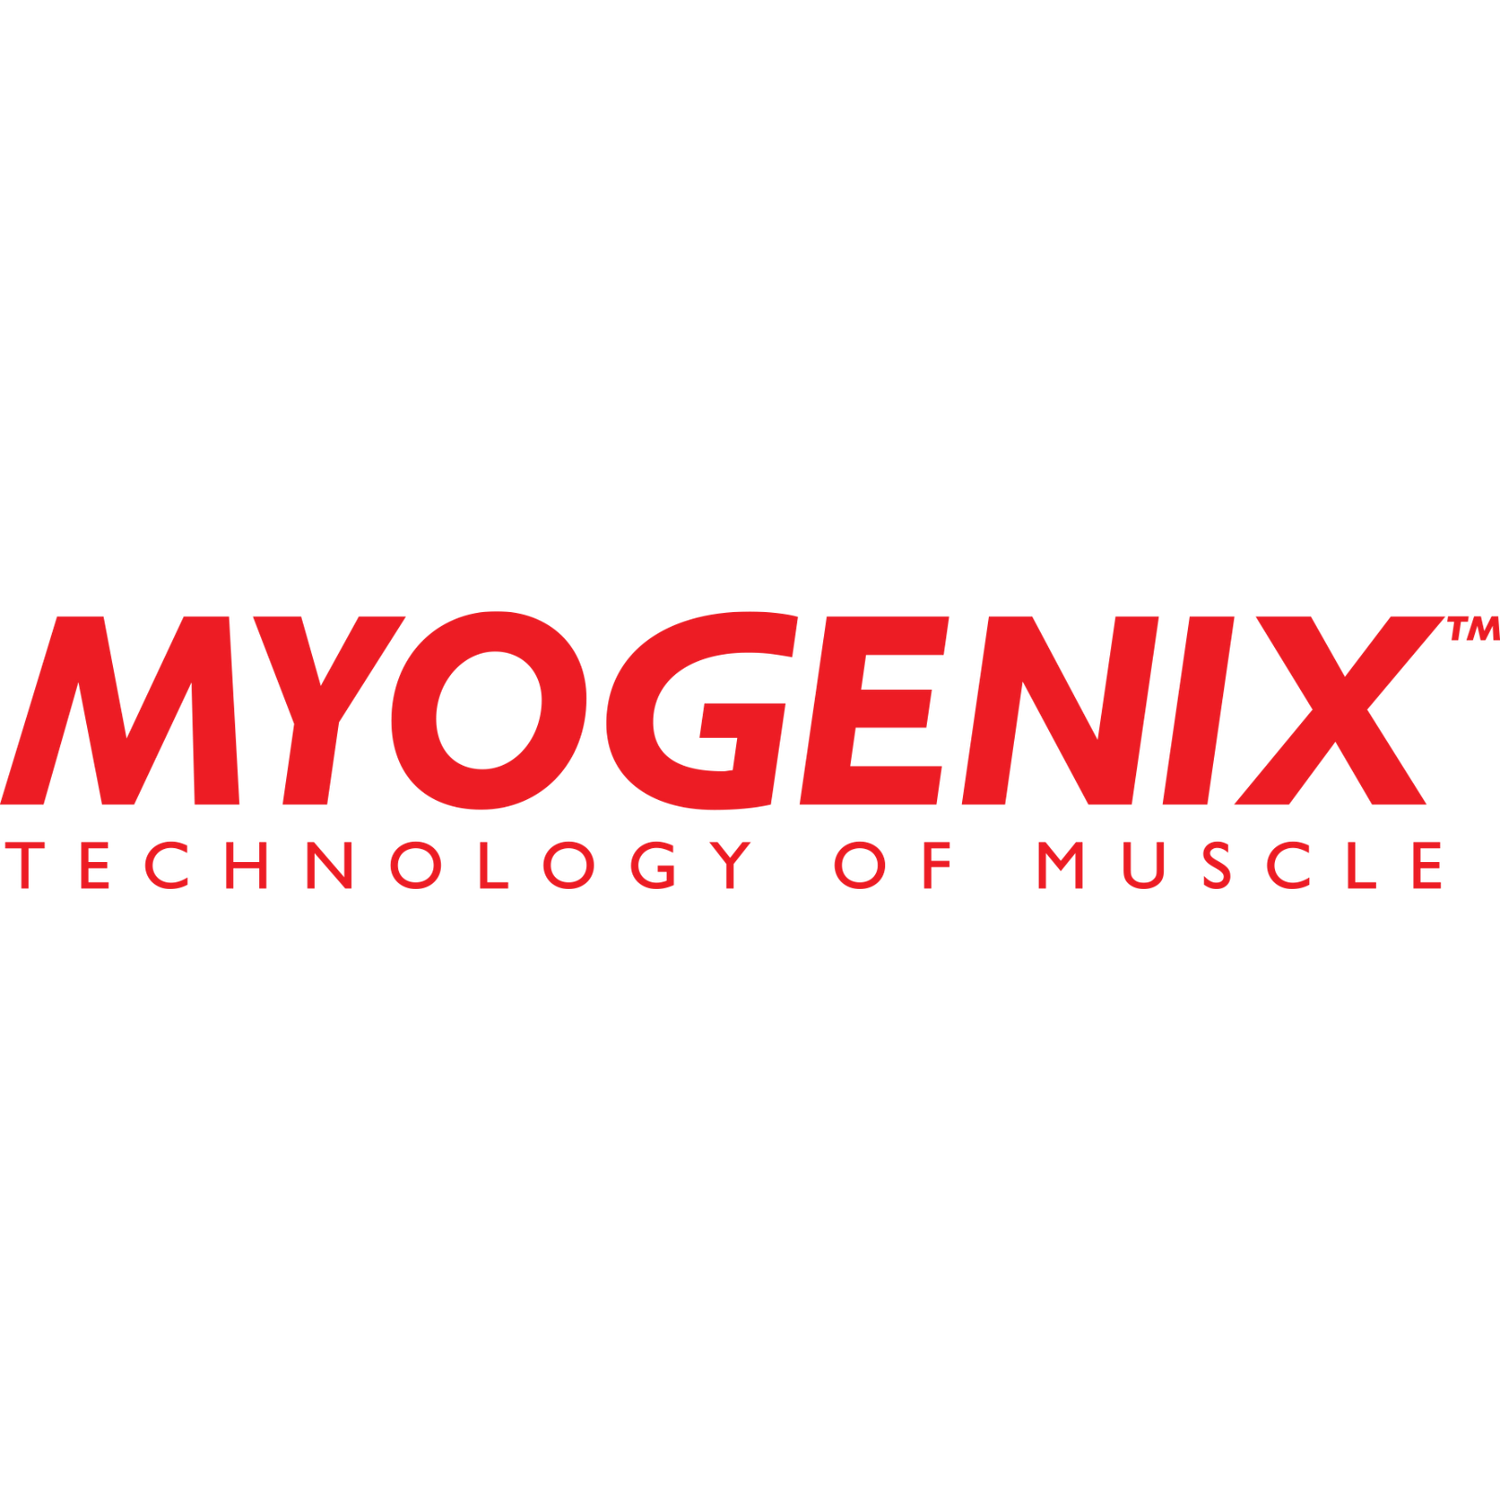 Myogenix